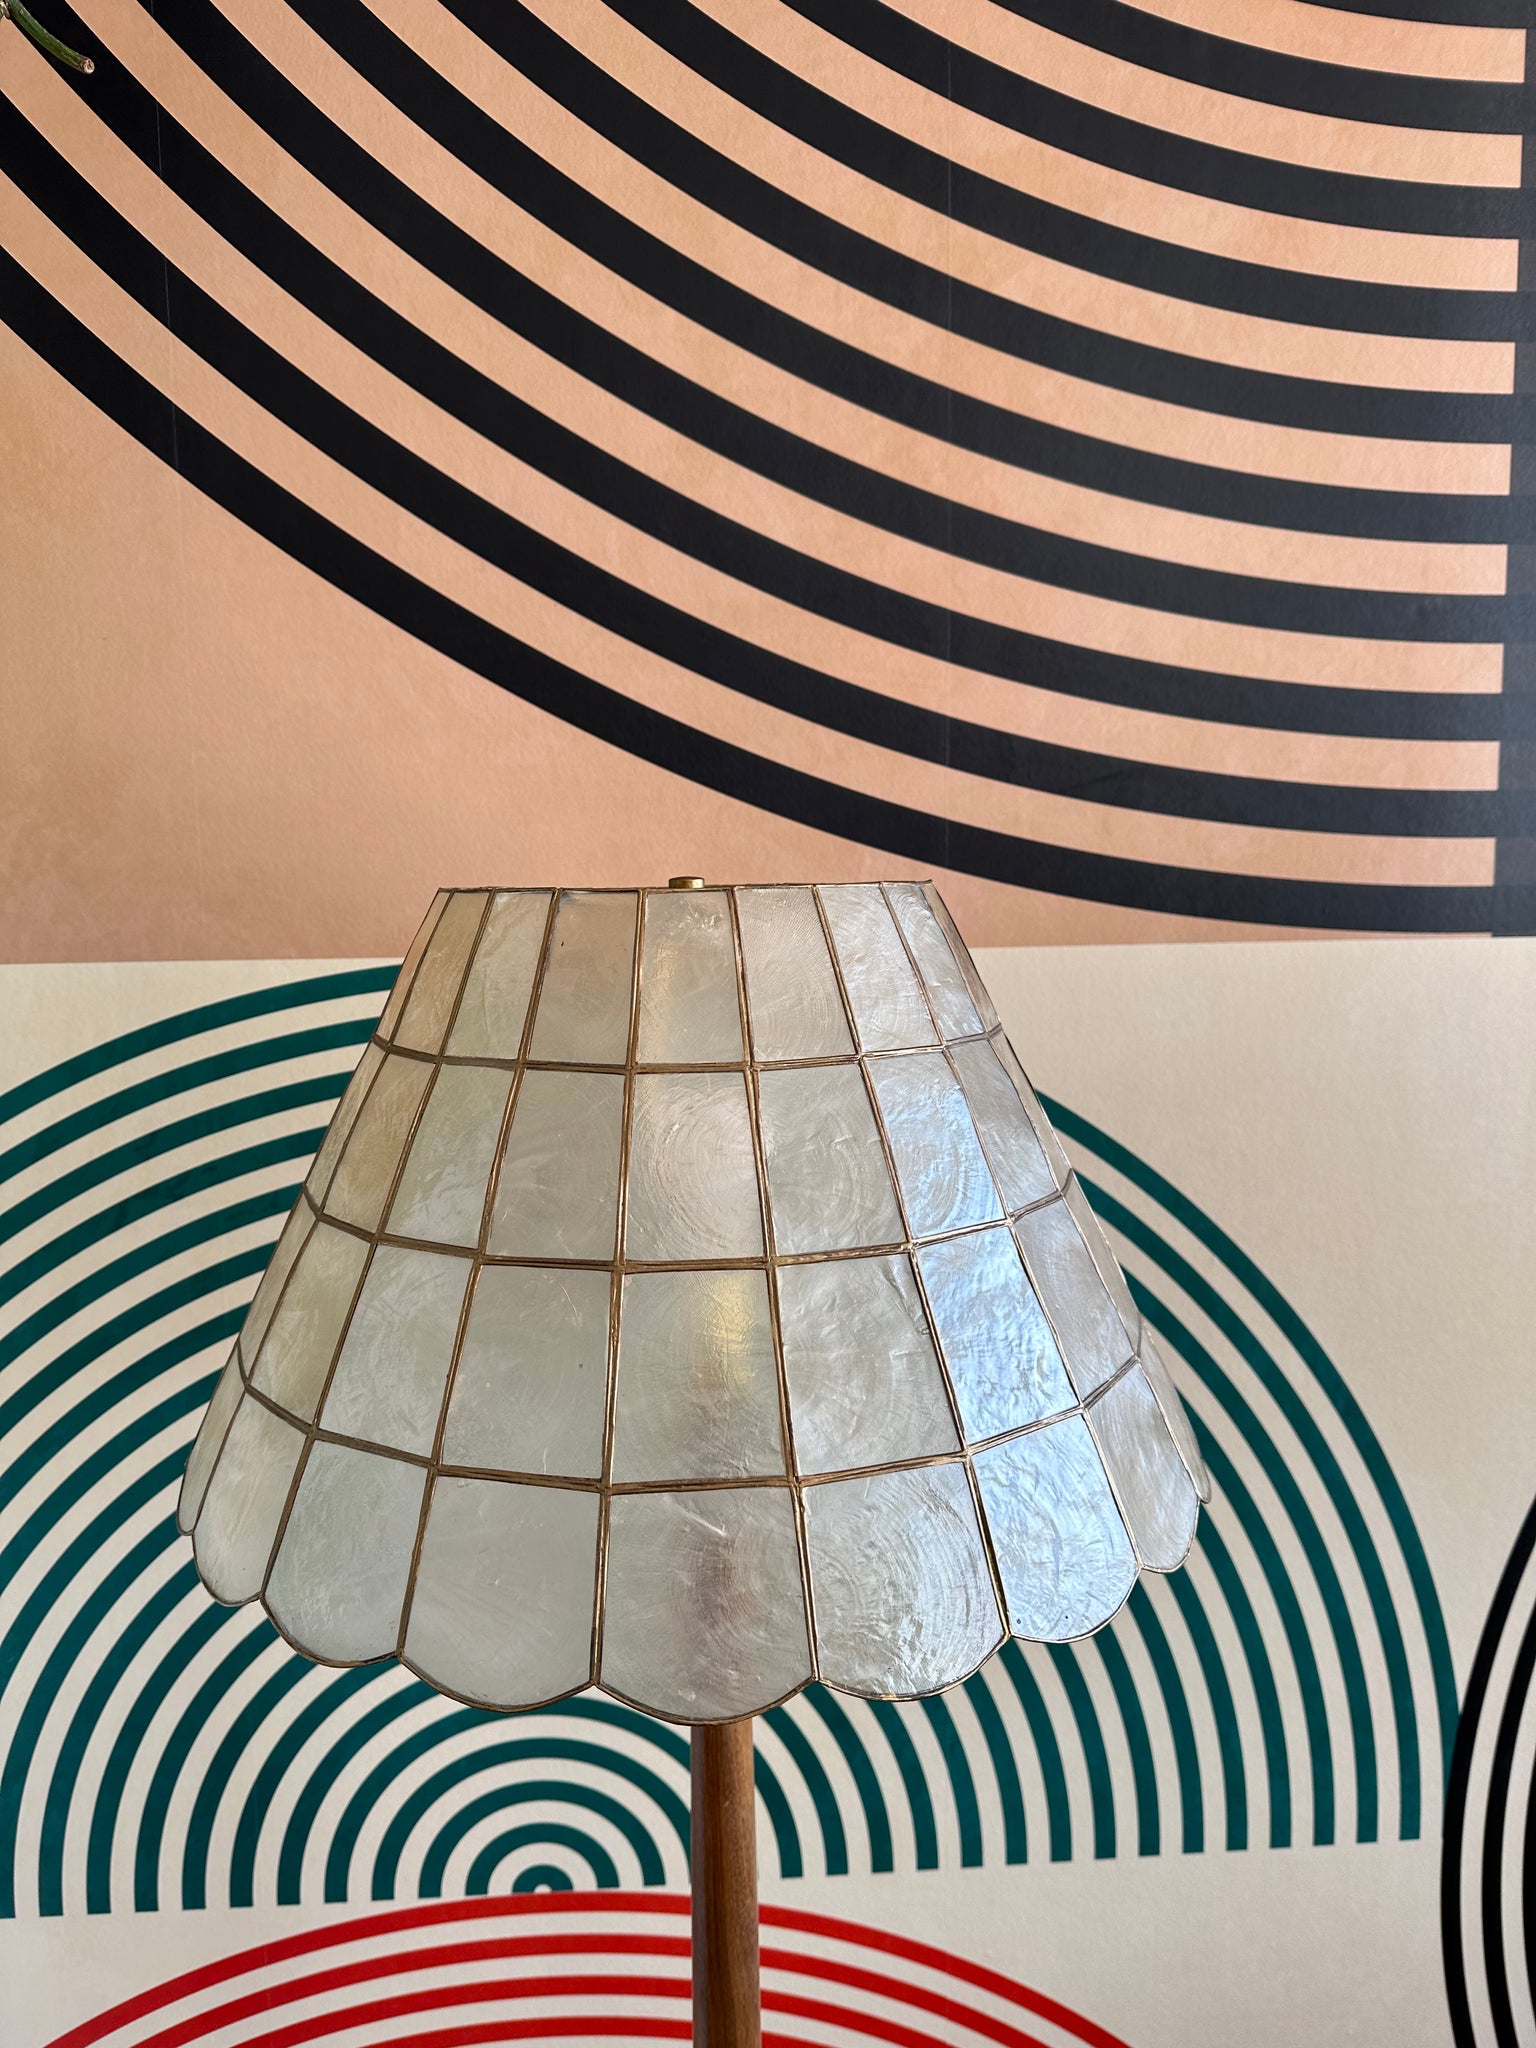 Vintage Solid Teak Floor Lamp with a Capiz Shade